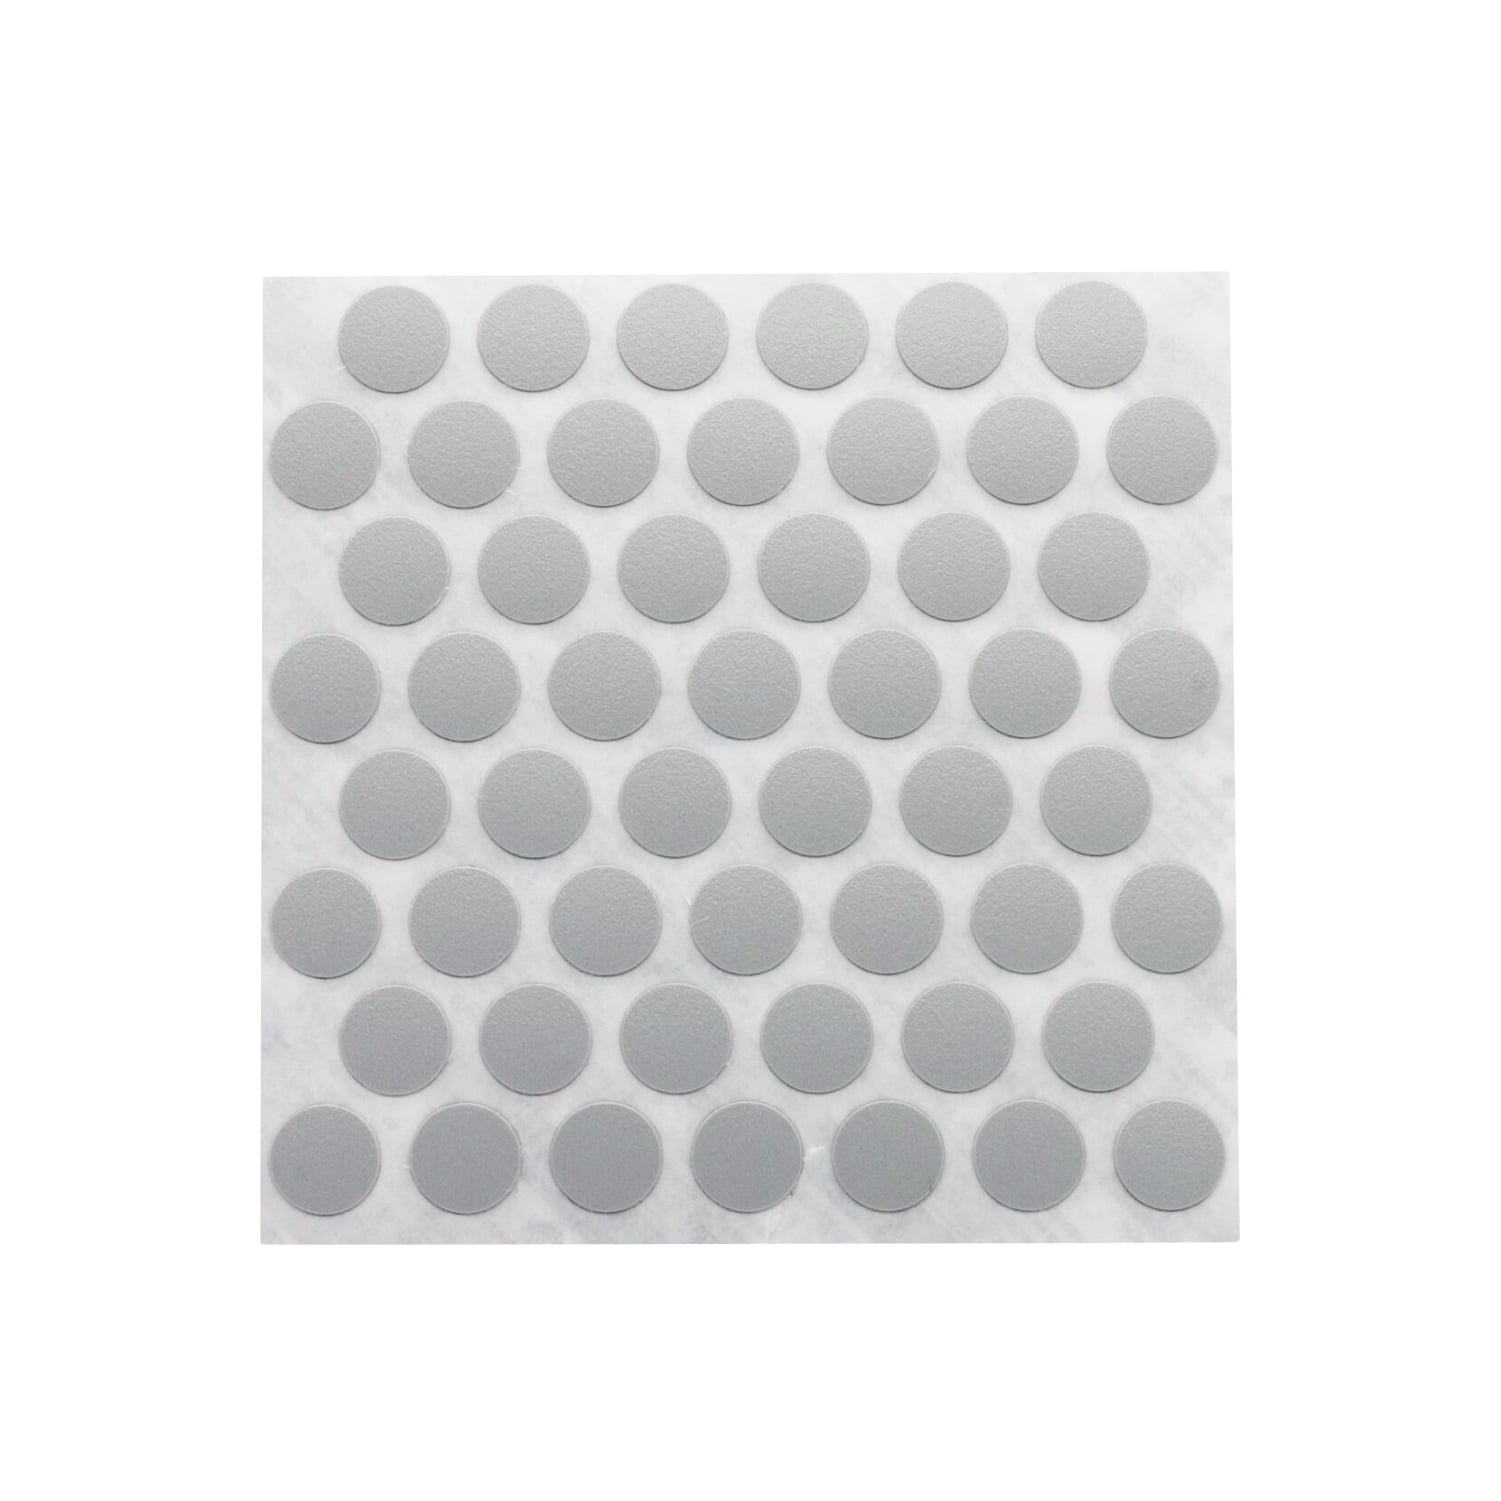 10 self adhesive cover caps screw hole stickers furniture black grey white wood 